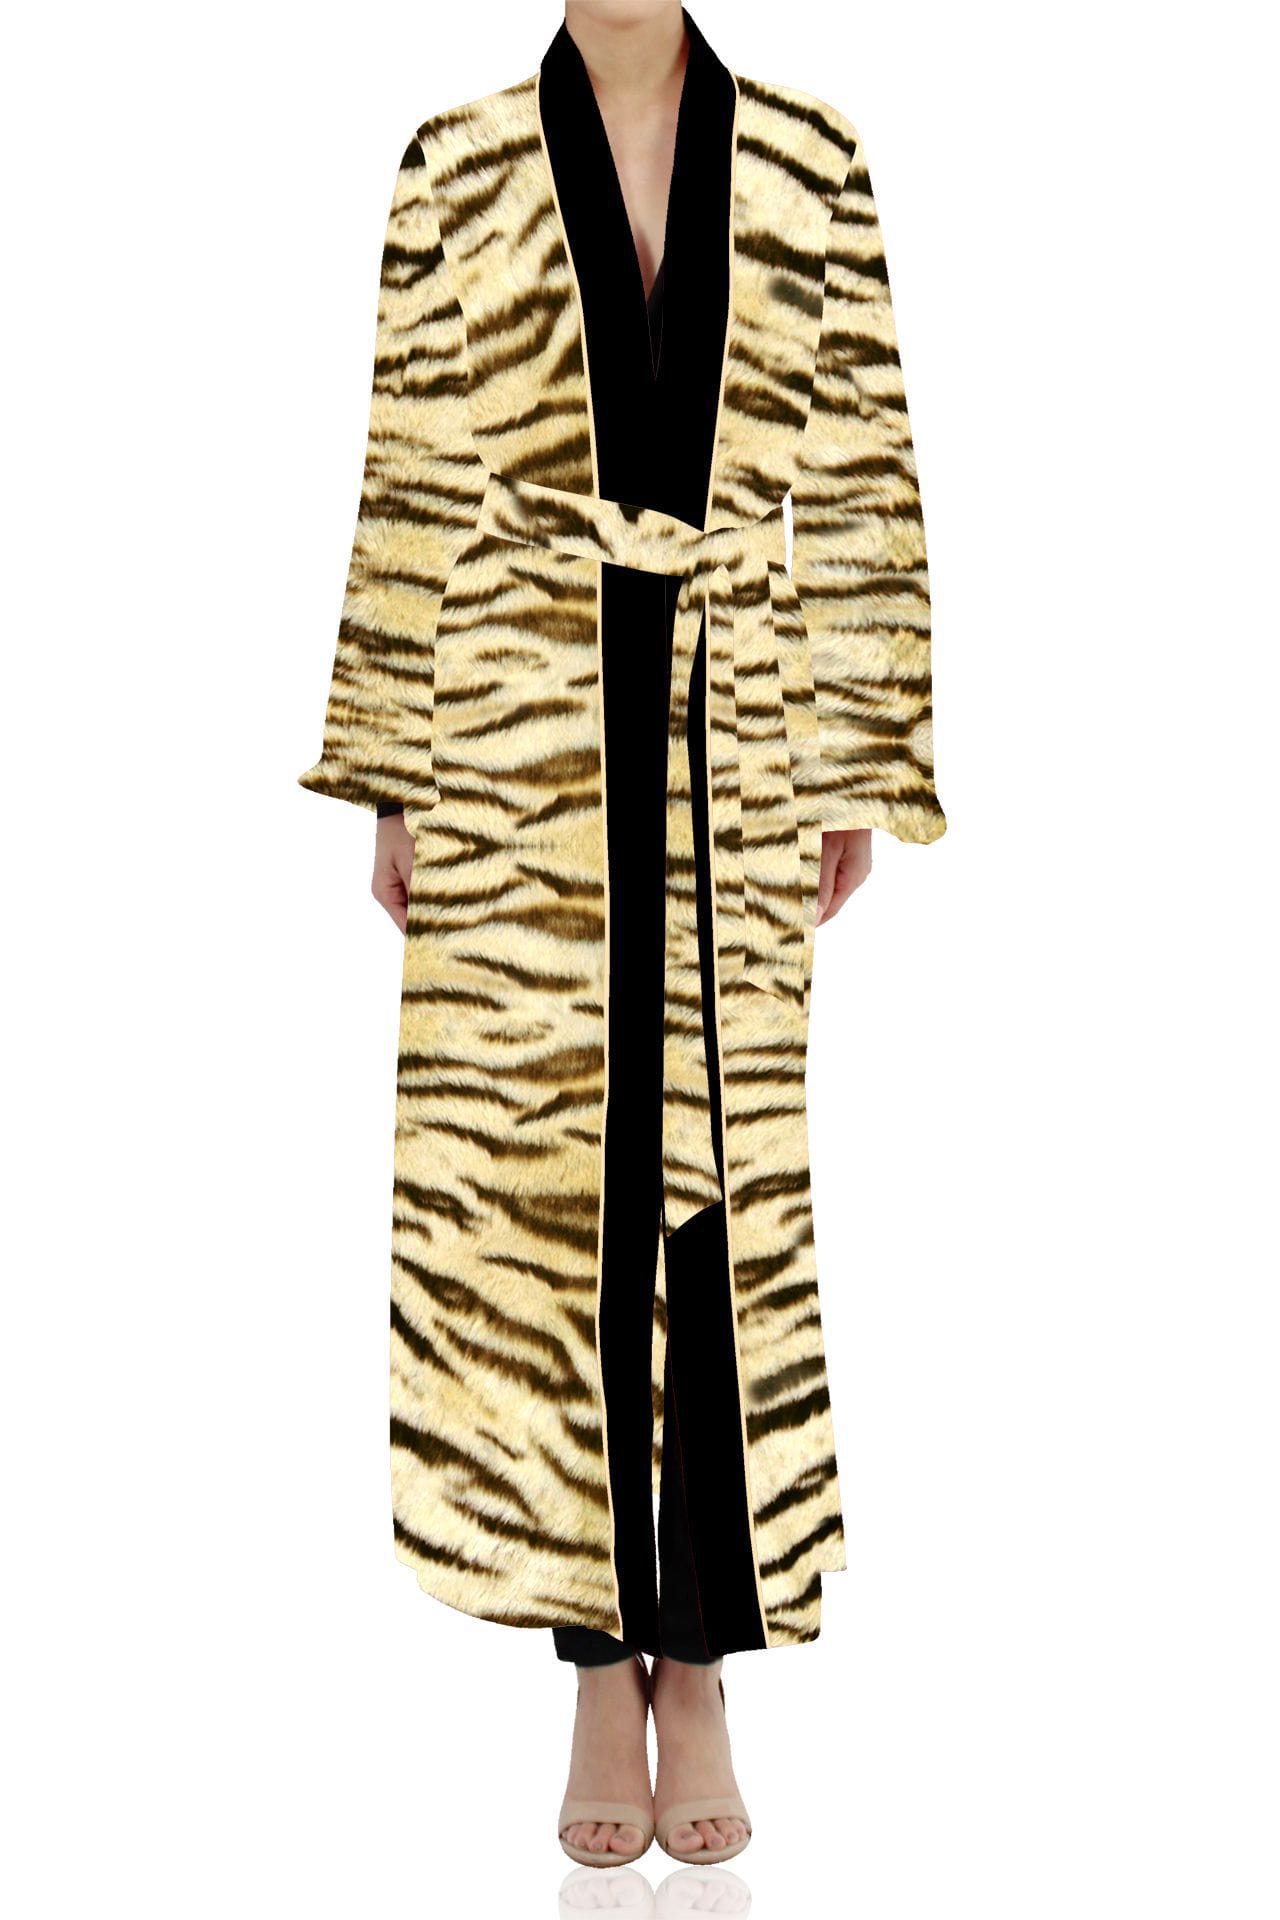 "Kyle X Shahida" "animal print kimono" "kimono silk robes for women"  "silk robes for women" "womens kimono robes" 